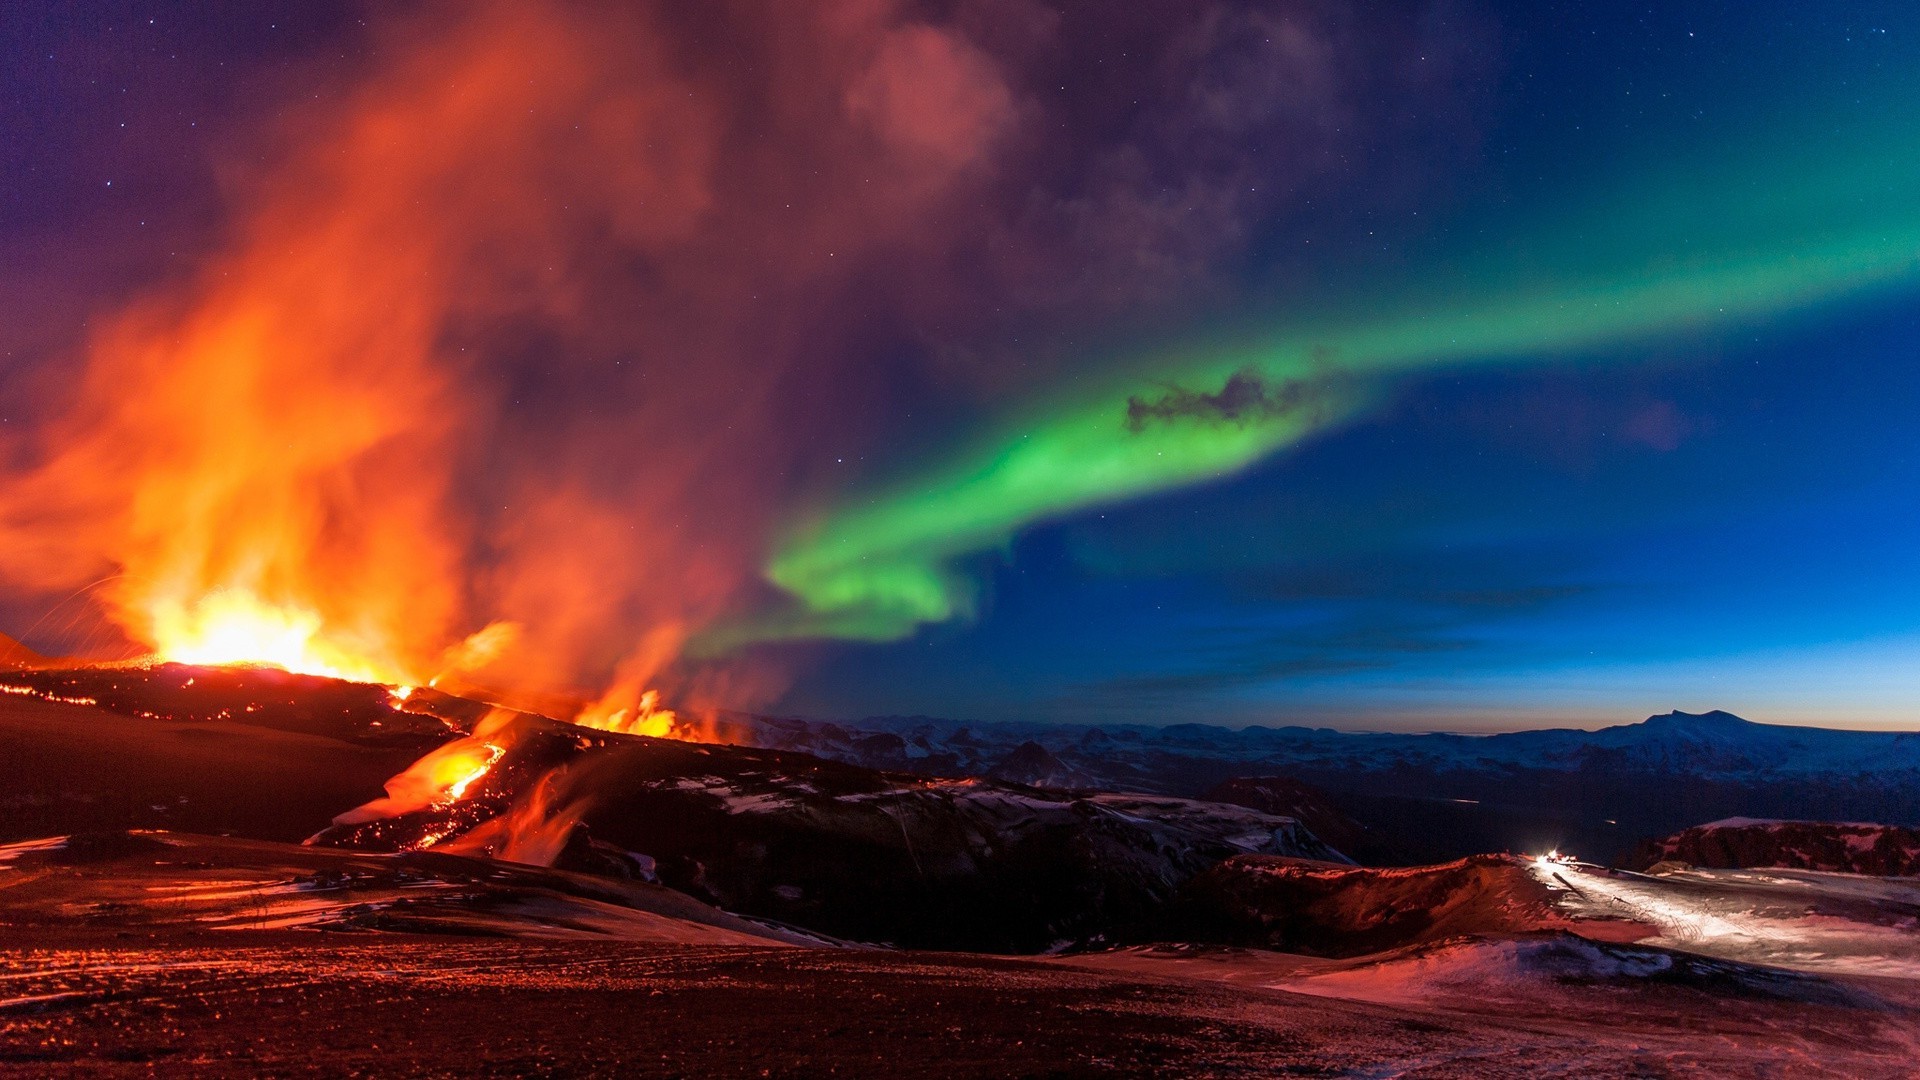 the volcano flame volcano calamity eruption smoke sunset landscape danger hot intensity storm dawn